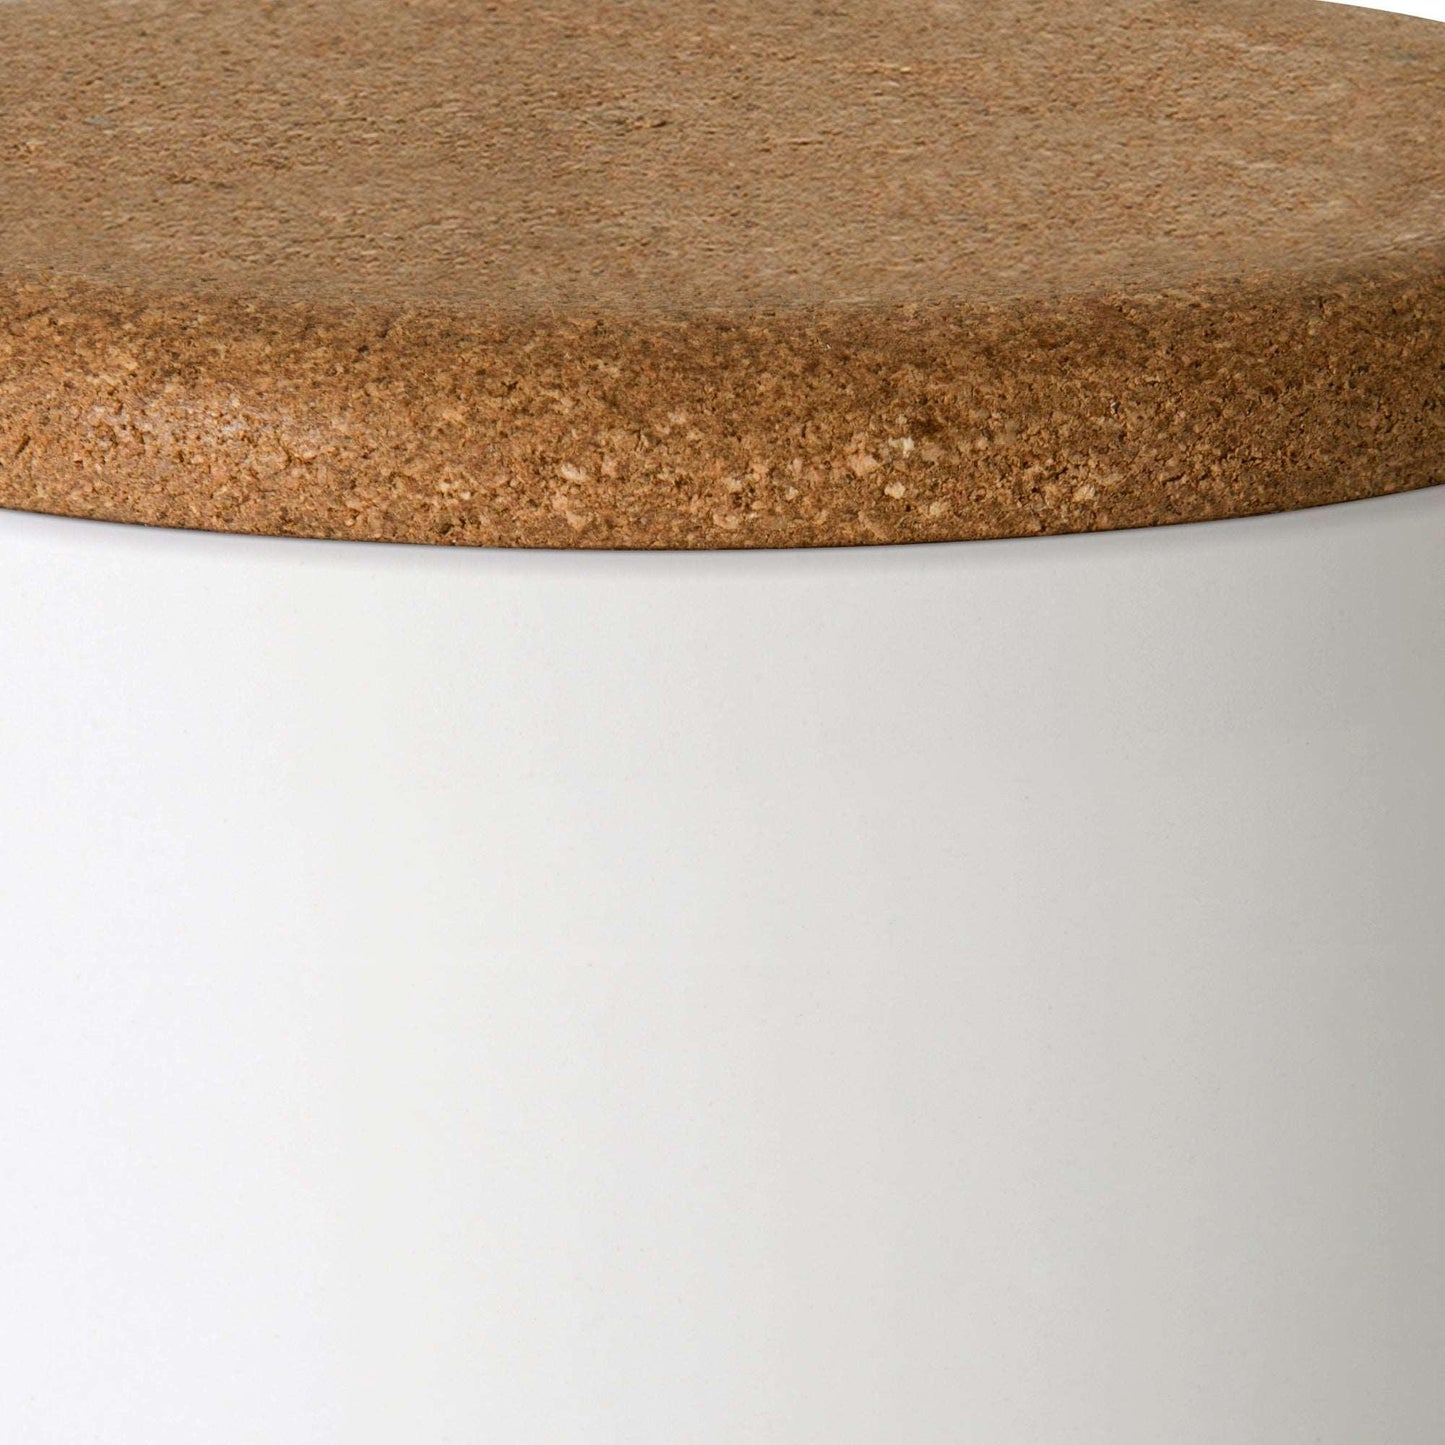 Beringer Cotton Ball Jar - Allure Home Creation